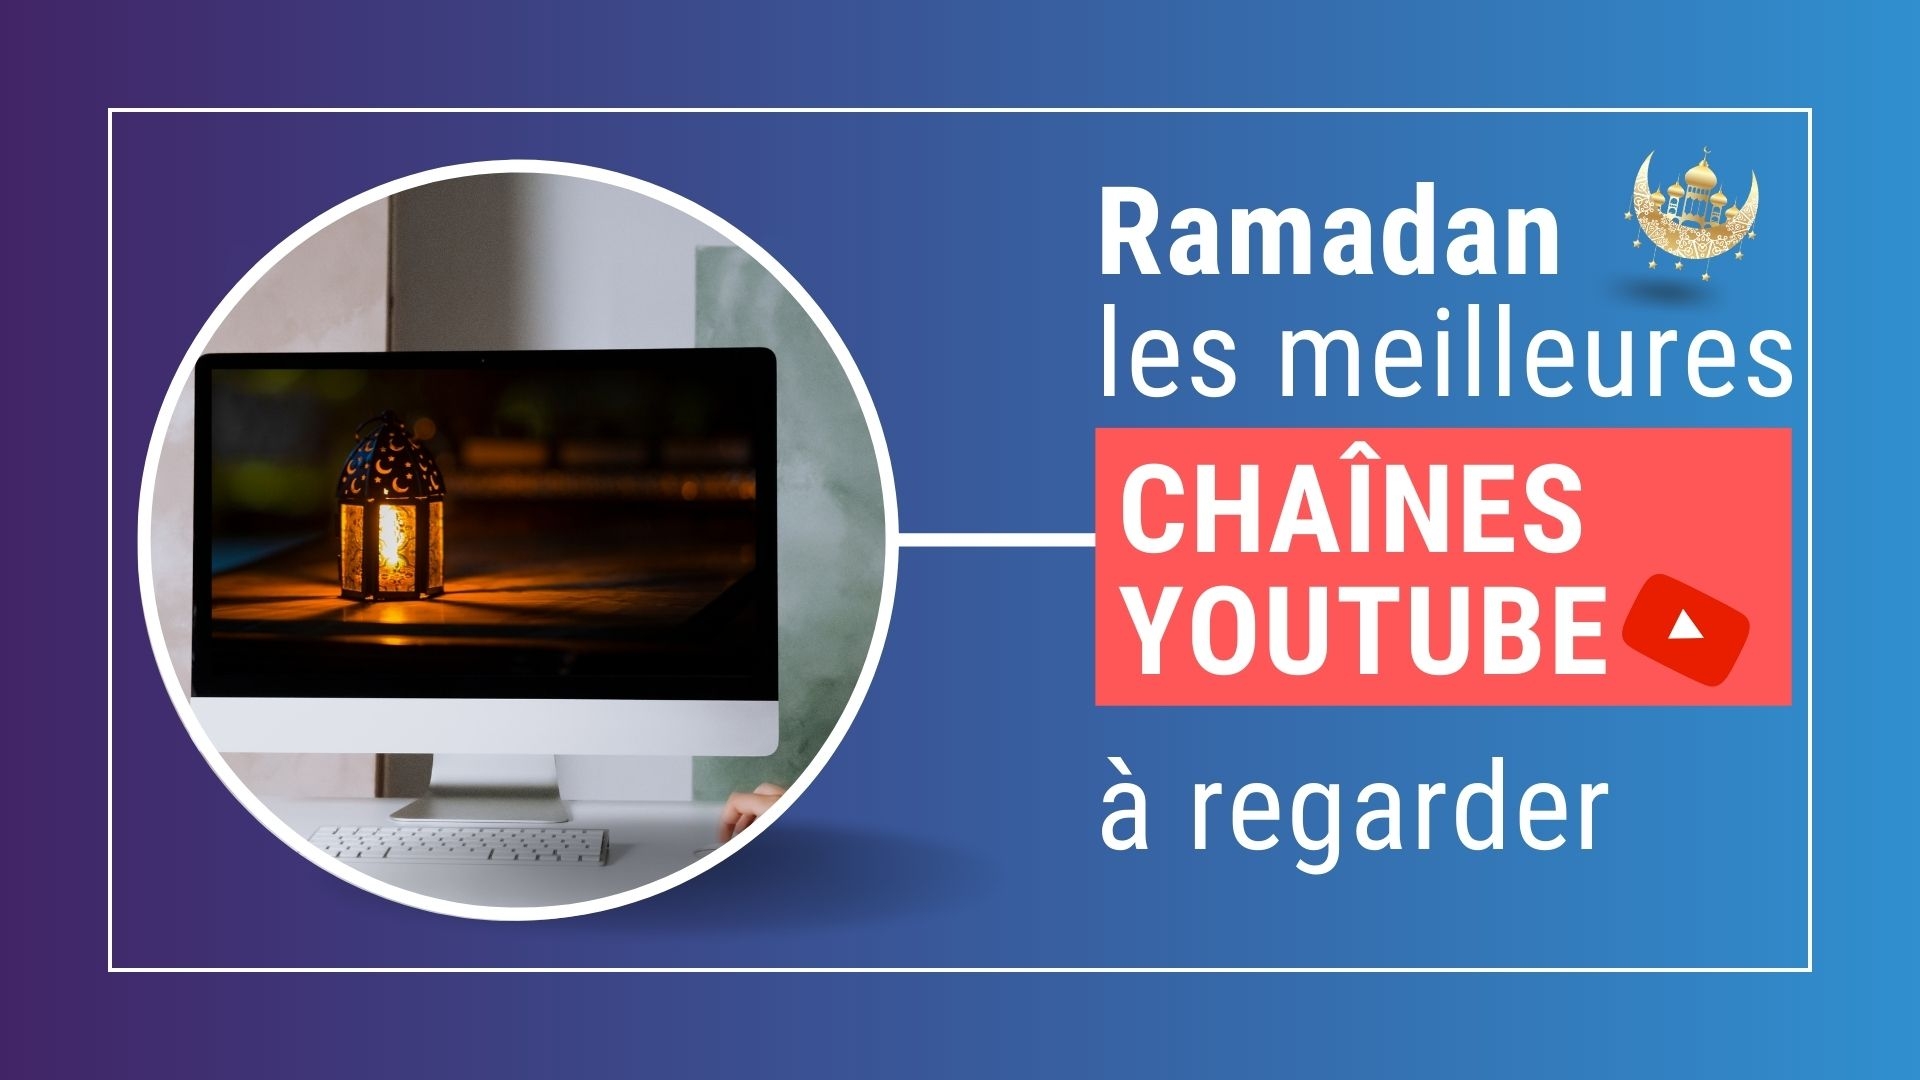 Quelles chaînes YouTube islamiques regarder pendant le ramadan ?